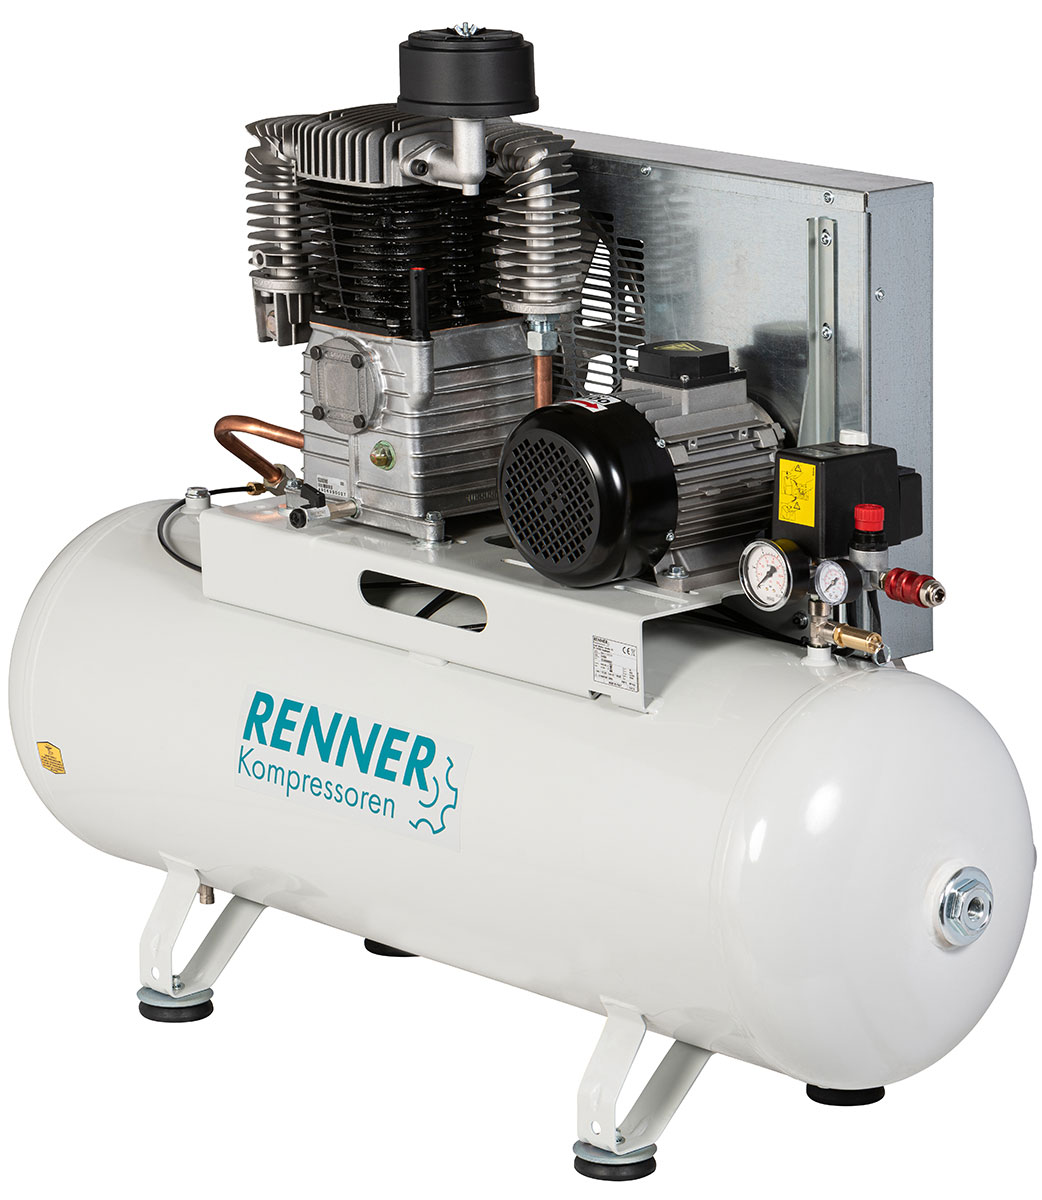 RENNER REKO H 510/150 - 710/150 Piston Compressor For Craft And Industry 3.0 - 4.0 kW, 14 Bar, 150 Liters